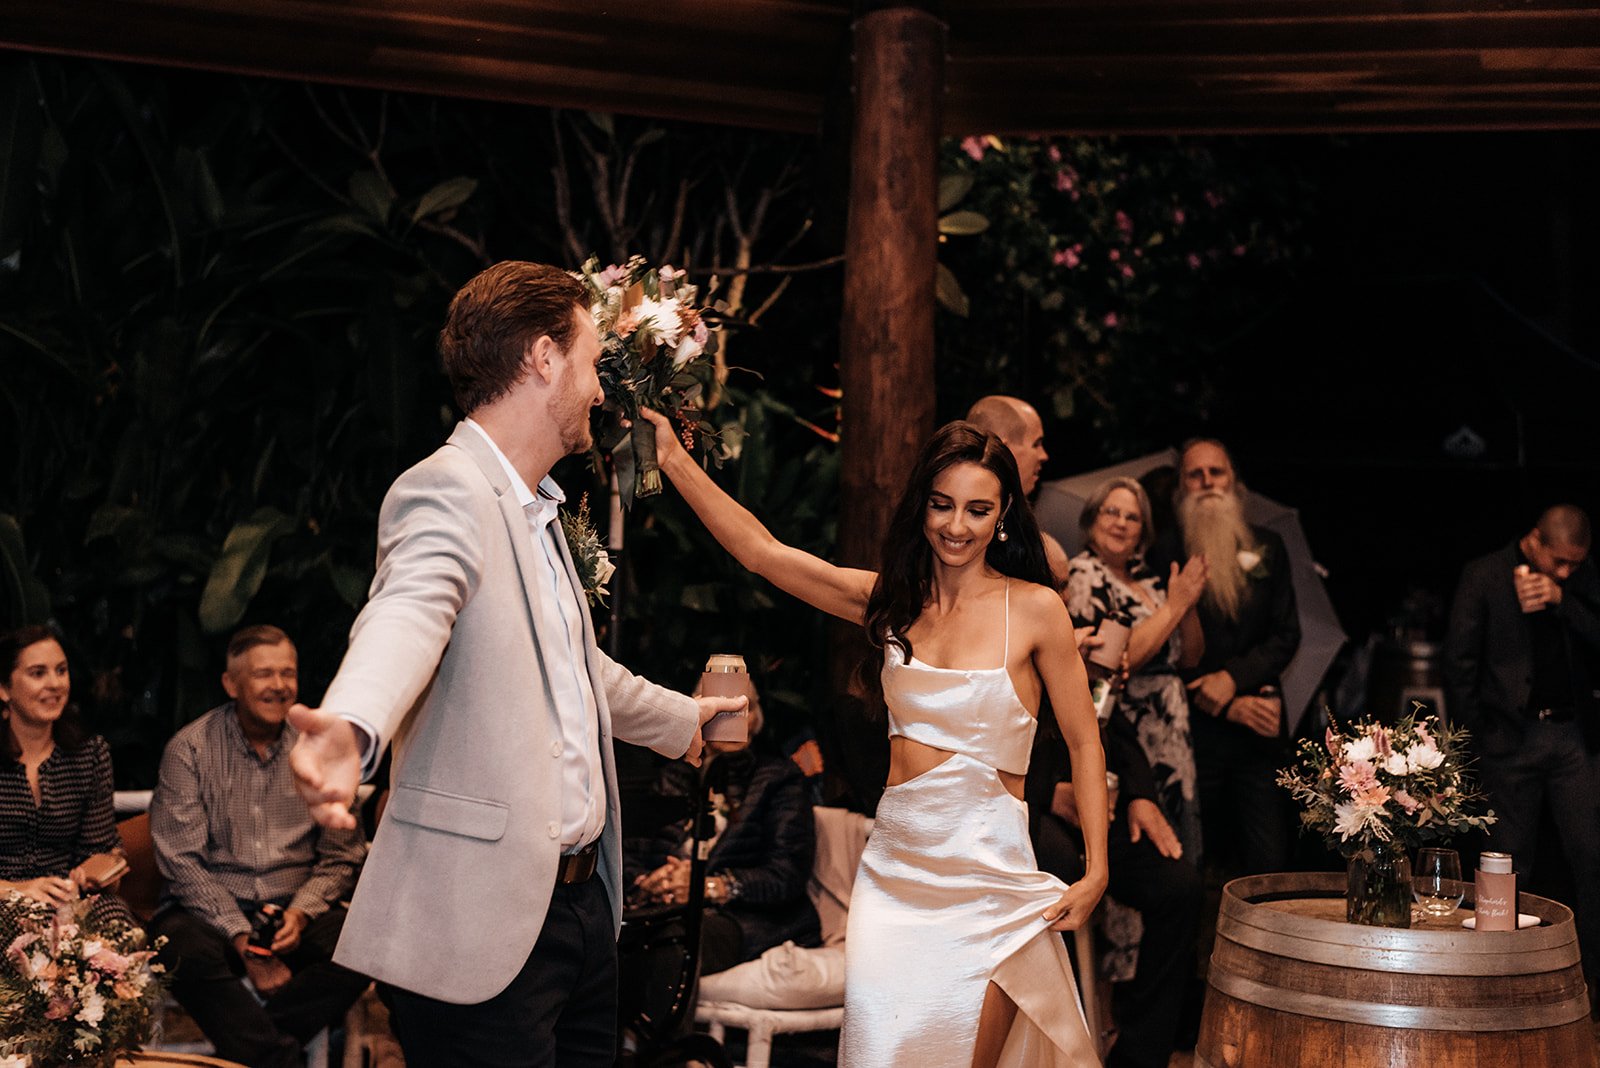 LOVELENSCAPES • The Figs Byron Bay Wedding • Chosen by Kyha • T&C • 558_websize.jpg